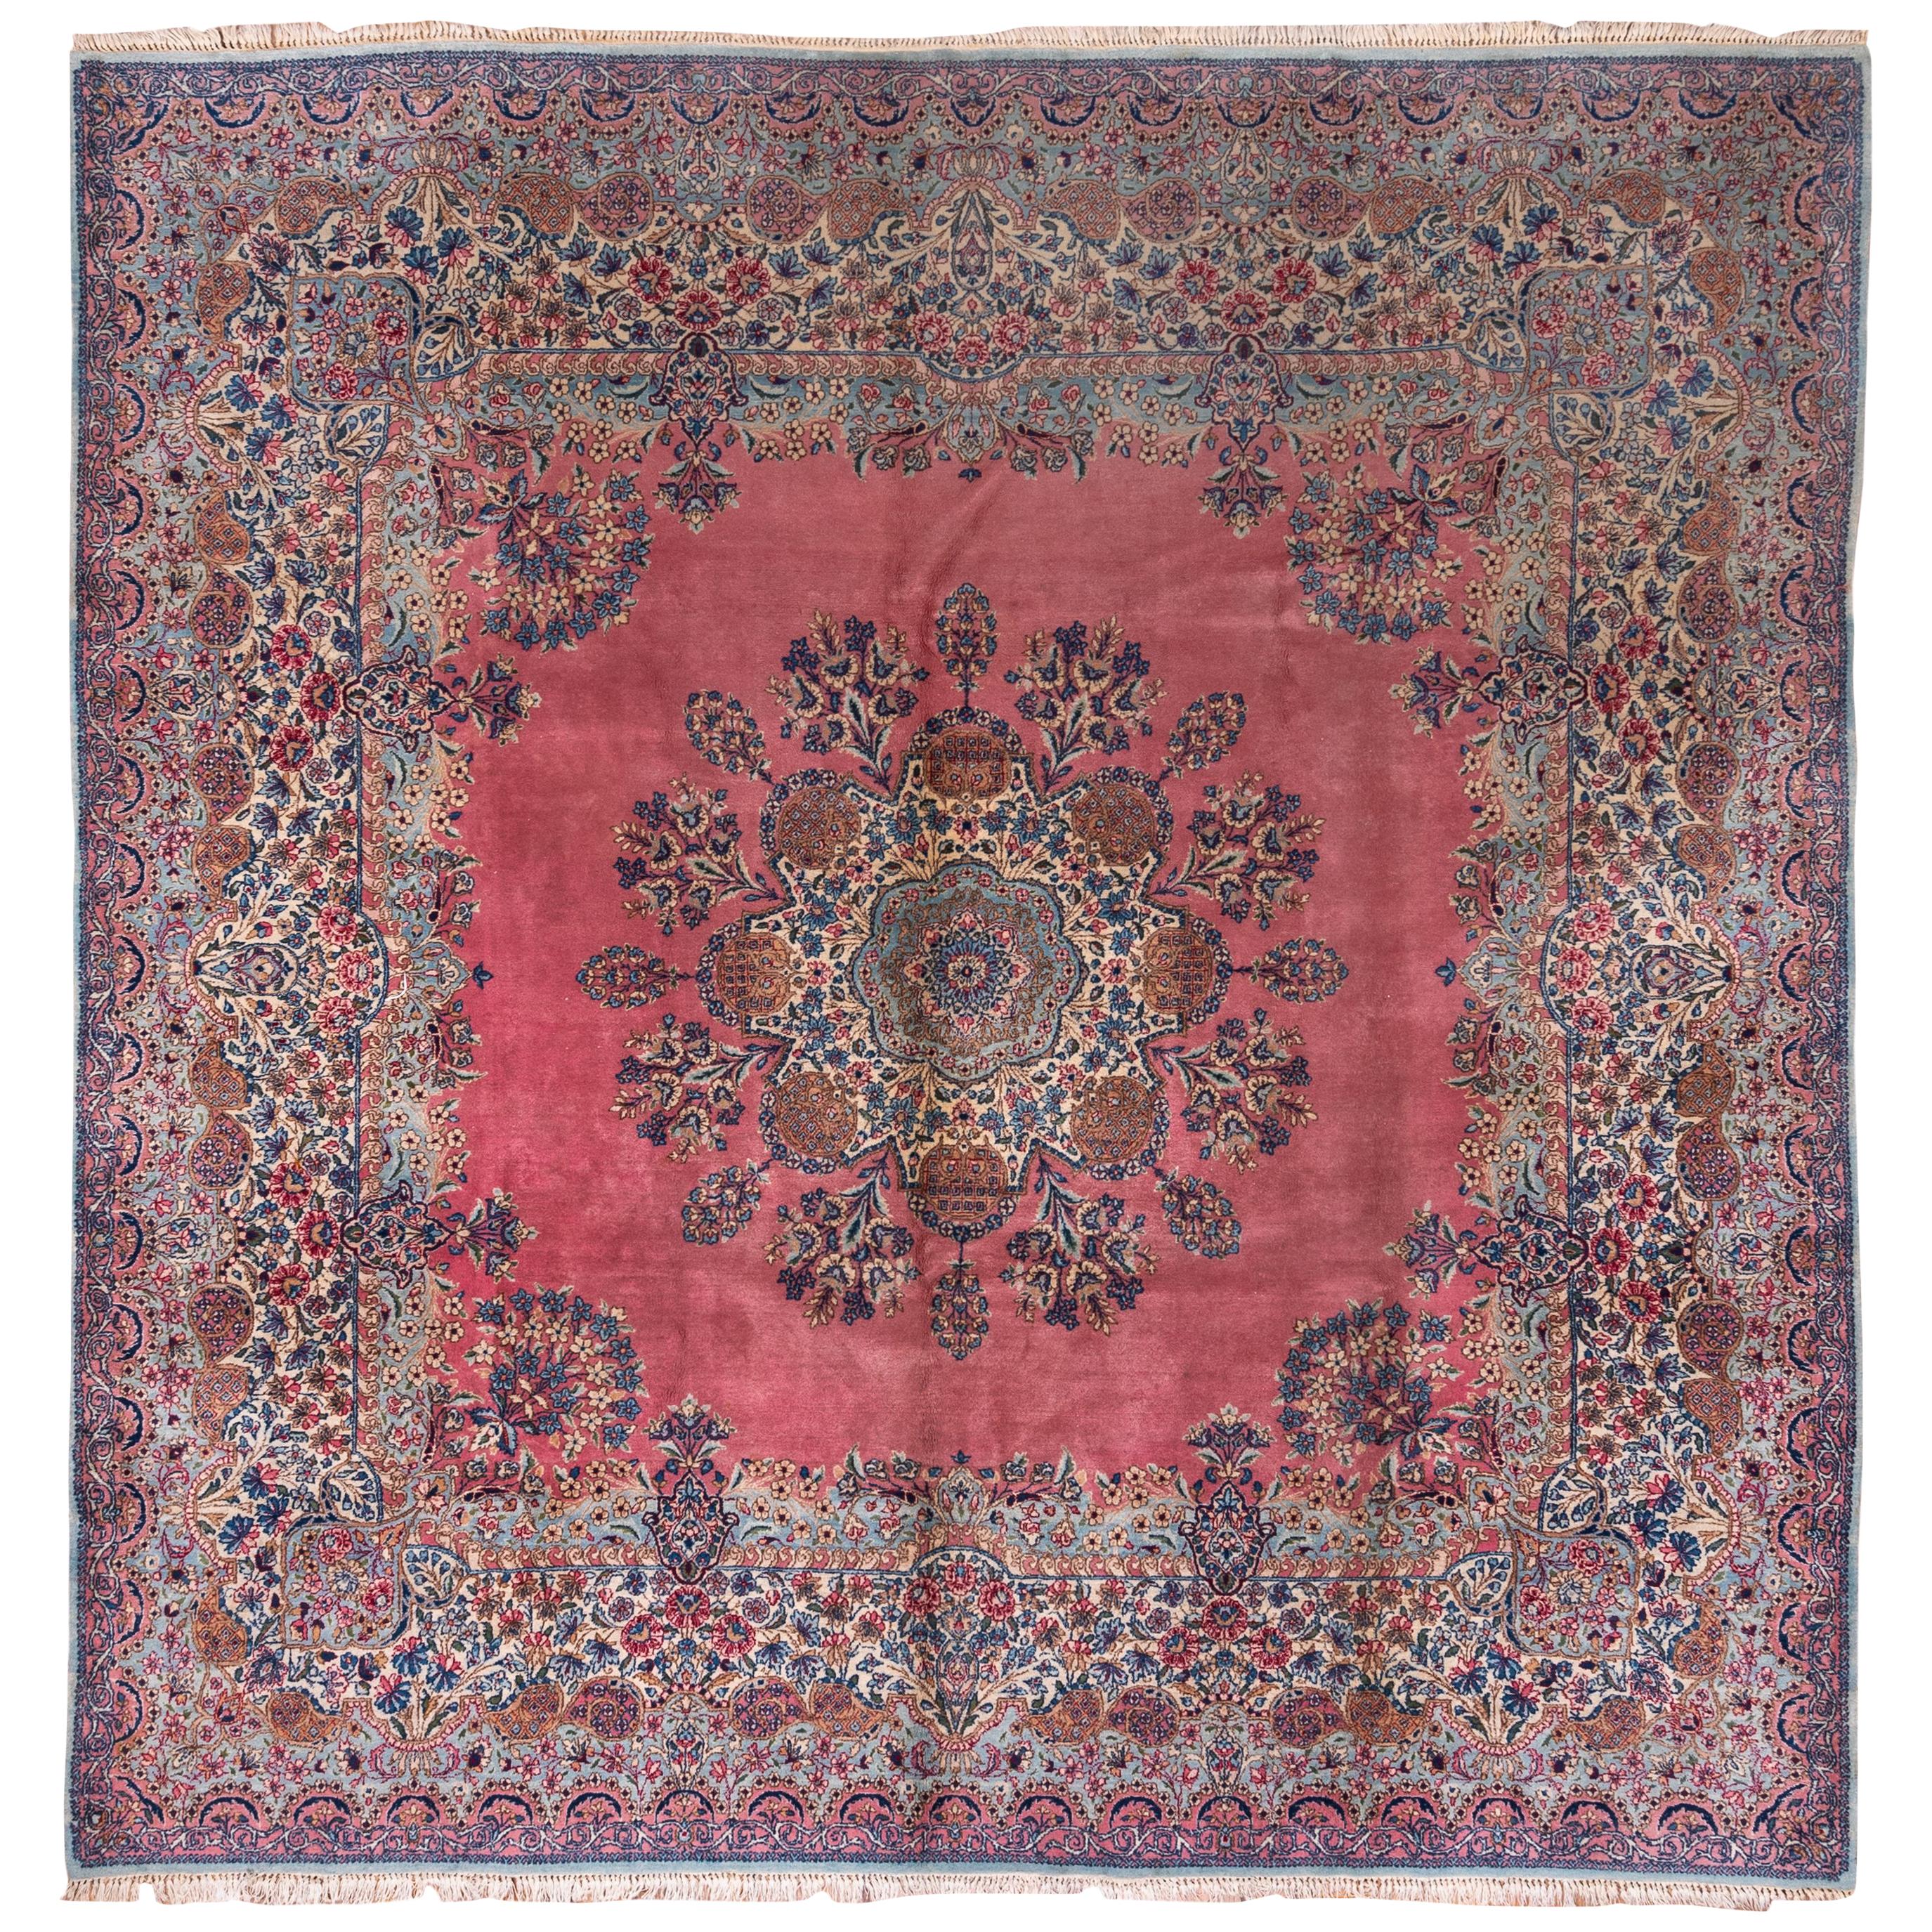 Square Antique Kerman Carpet